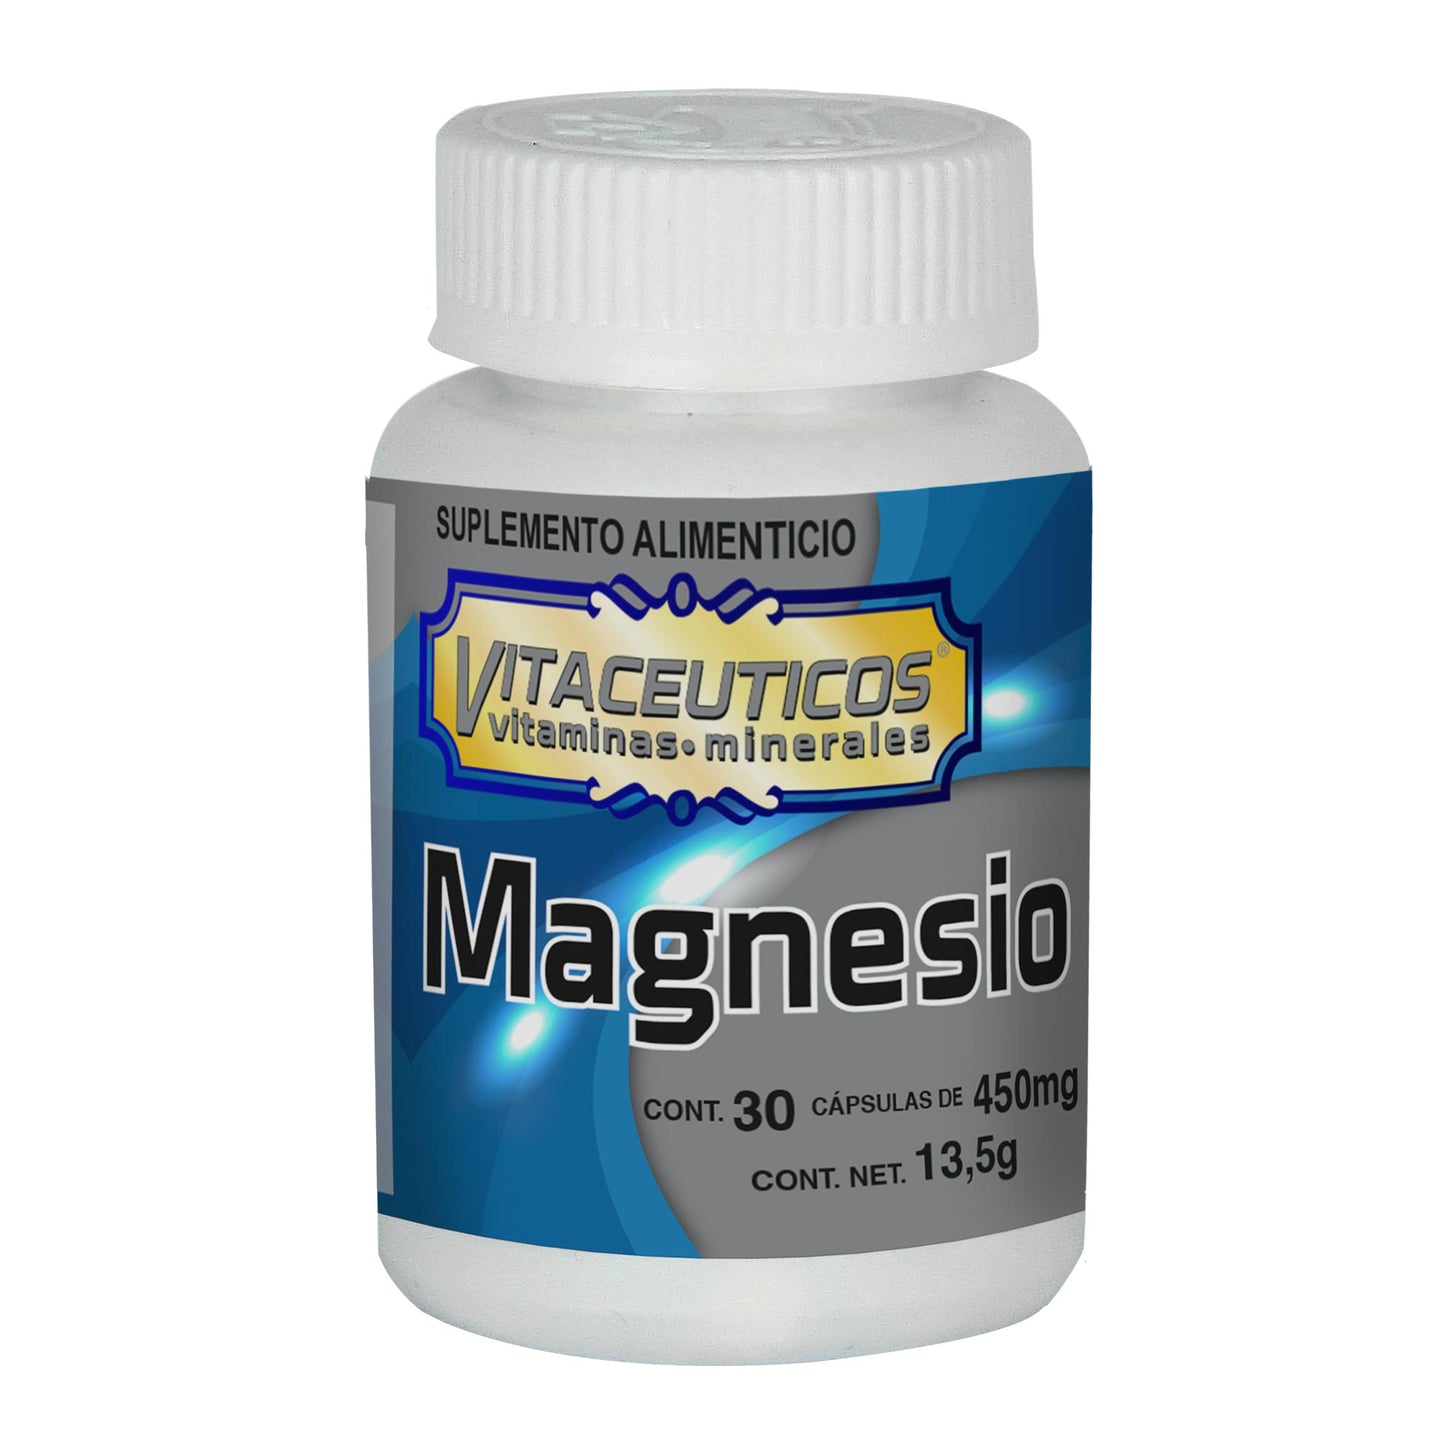 VITACEUTICOS ® 30 cápsulas de magnesio